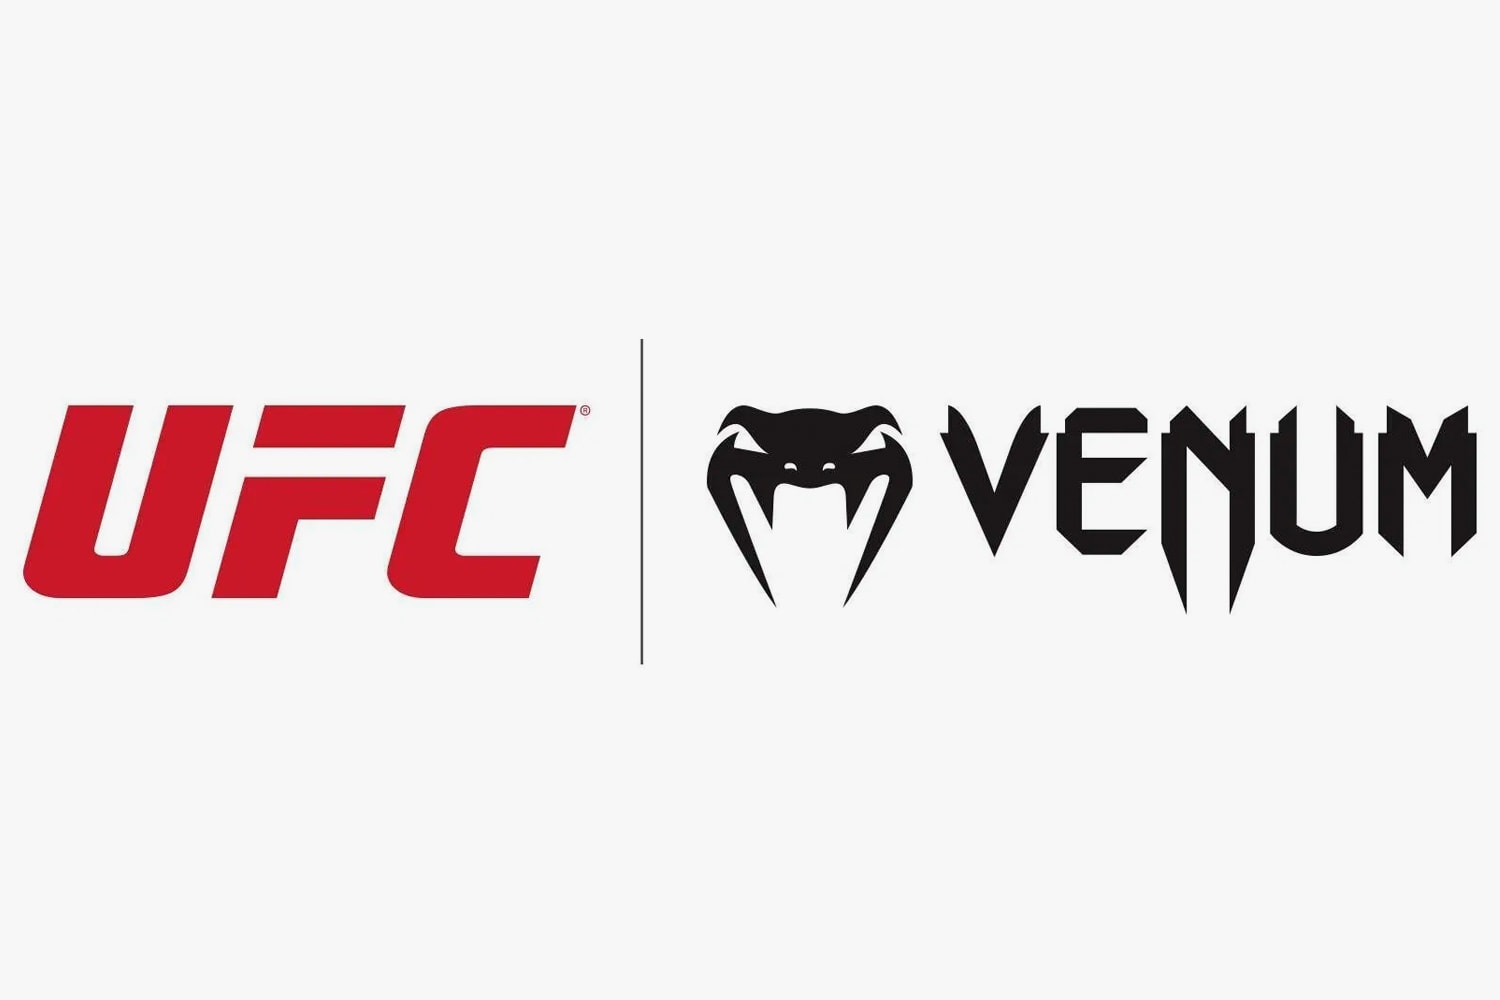 Venum Origins Sports Bag MMA UFC